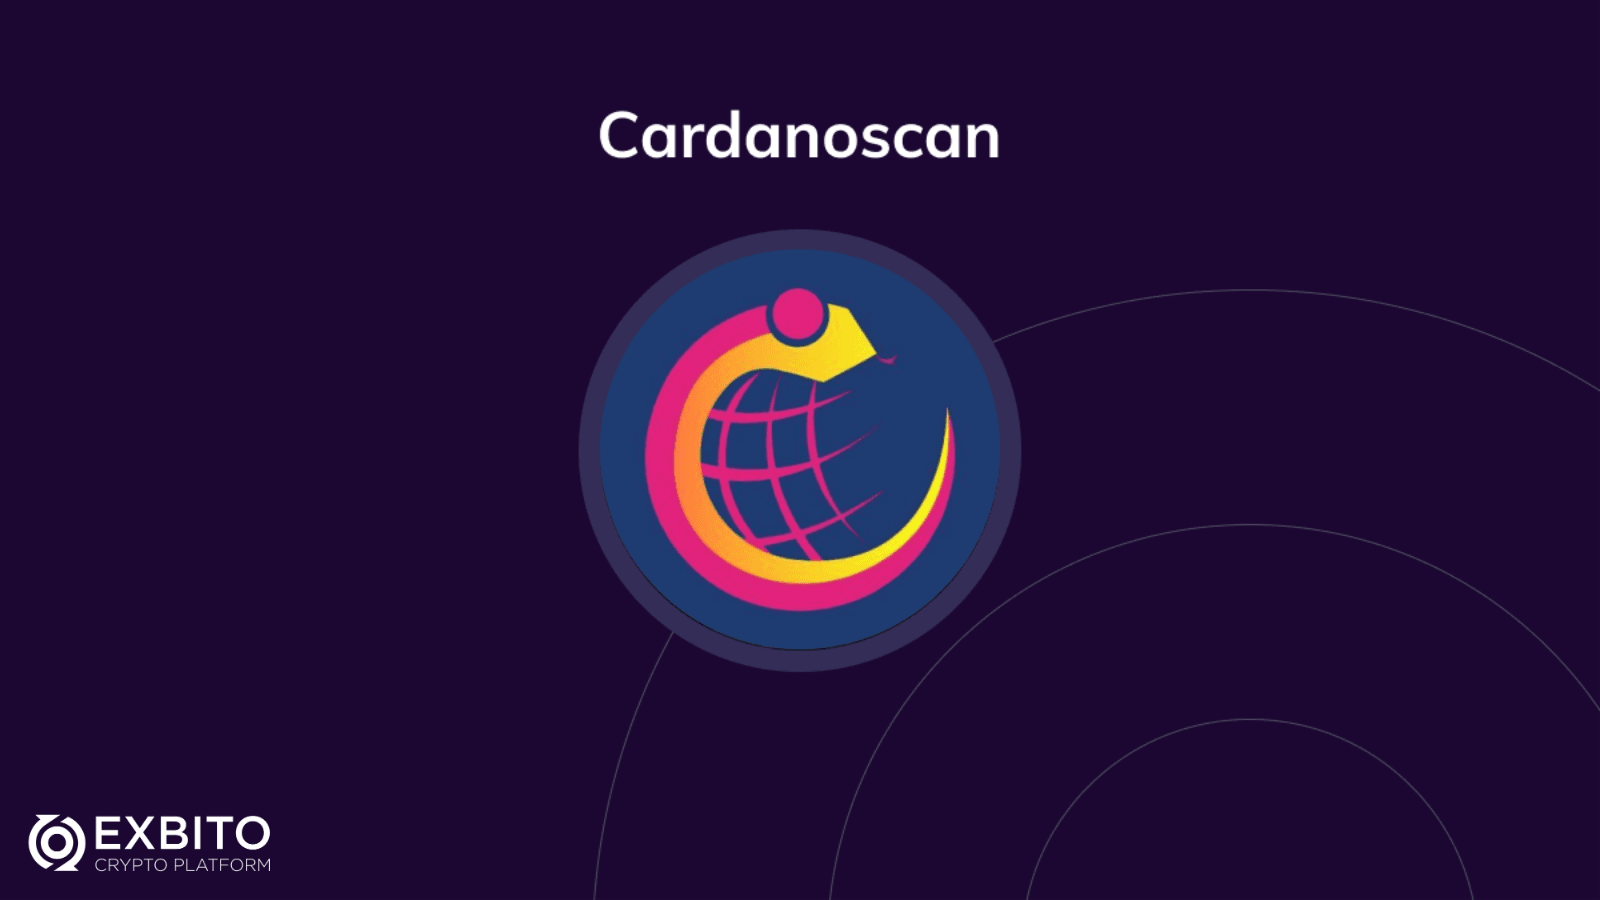 کاردانو اسکن (CardanoScan)